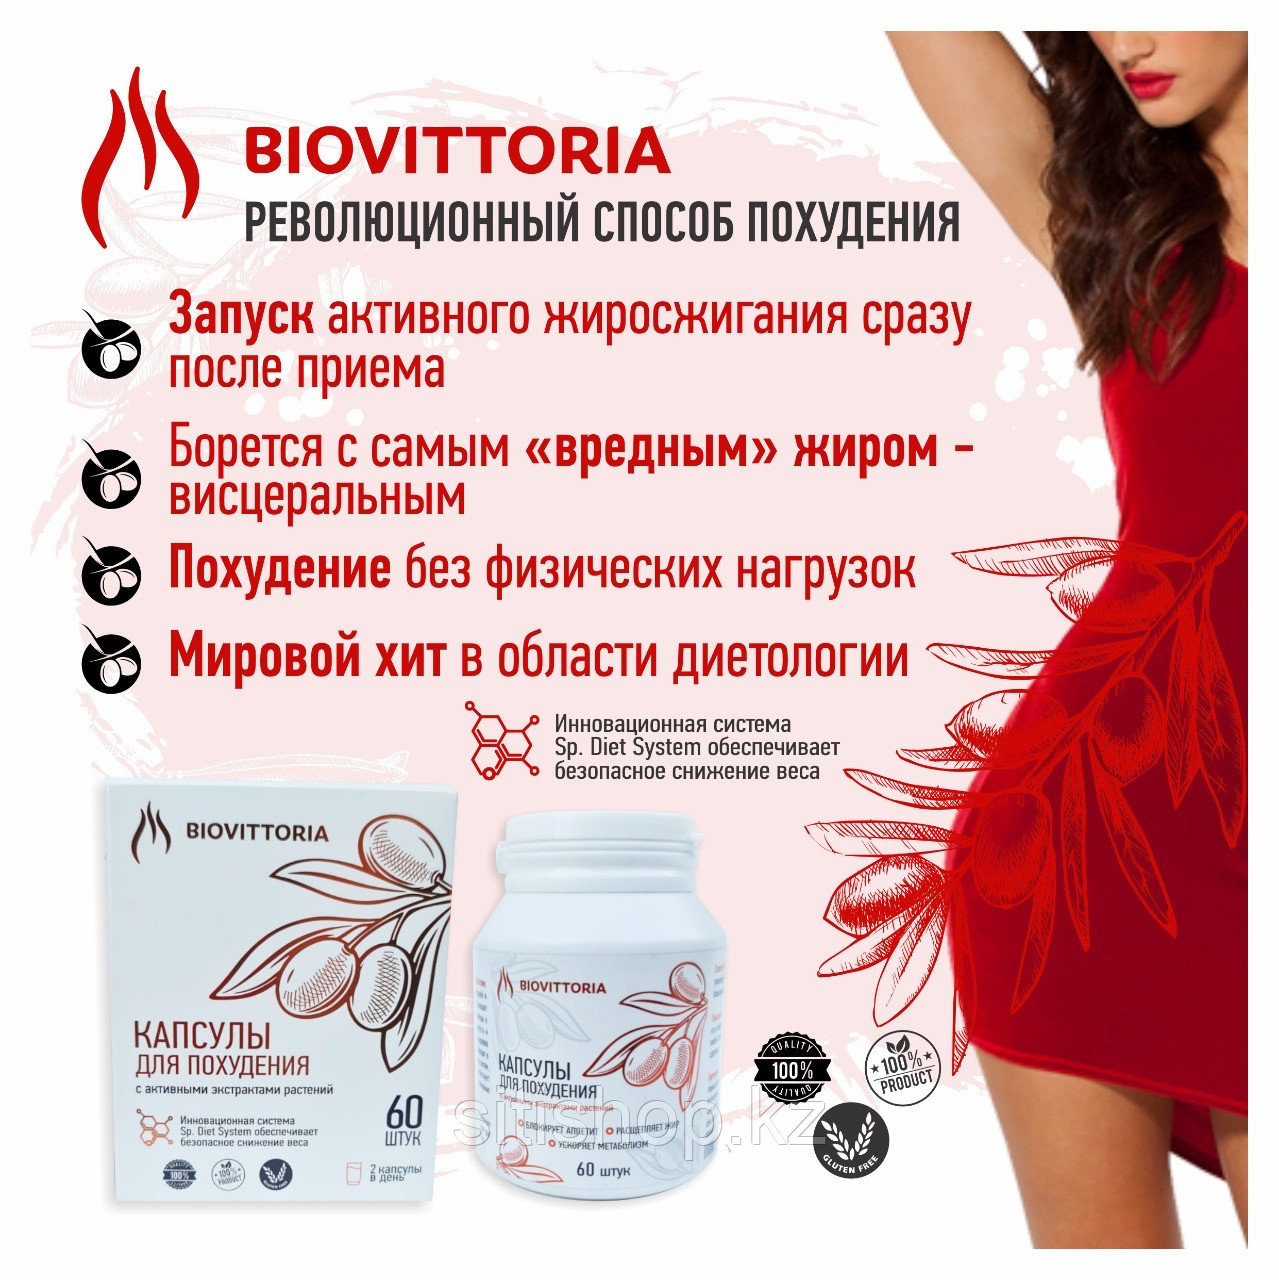 BioVittoria (биовиттория)60 капсул для похудения